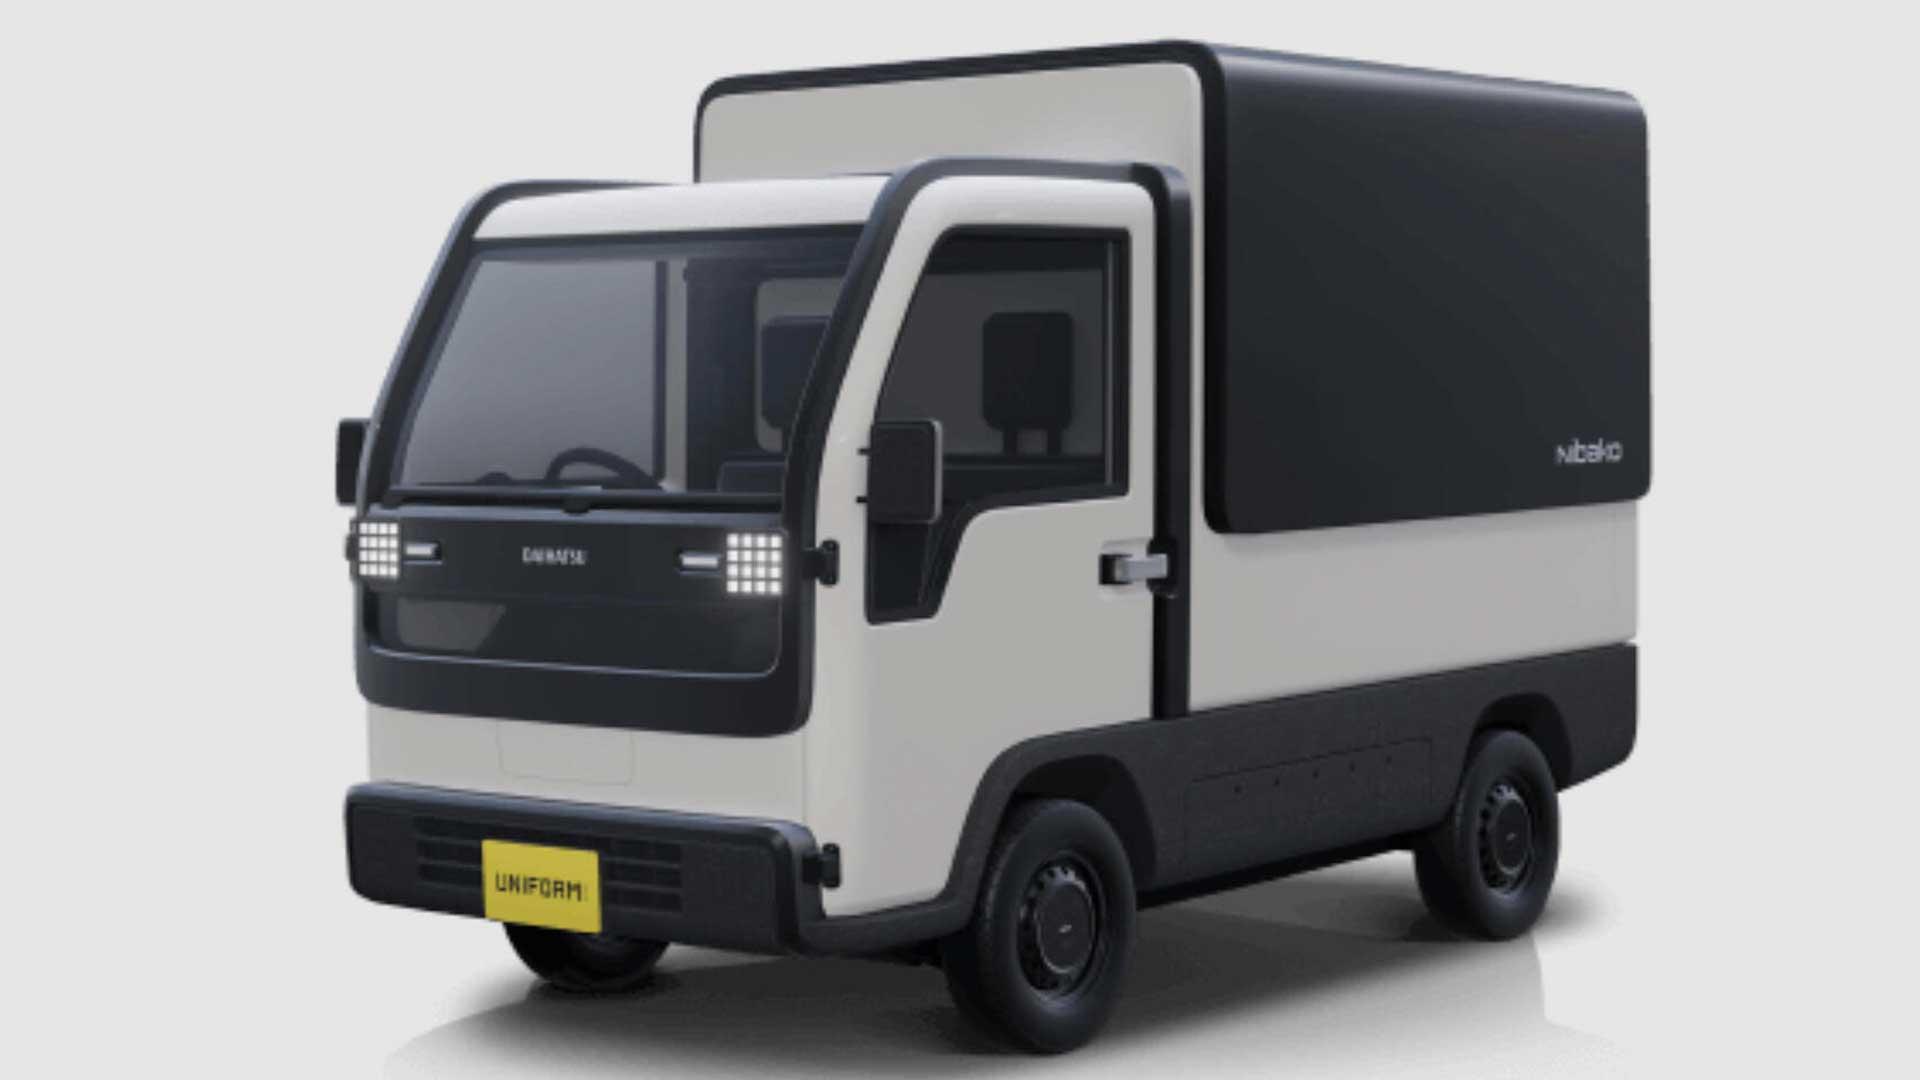 Daihatsu conceptauto's Uniform Truck